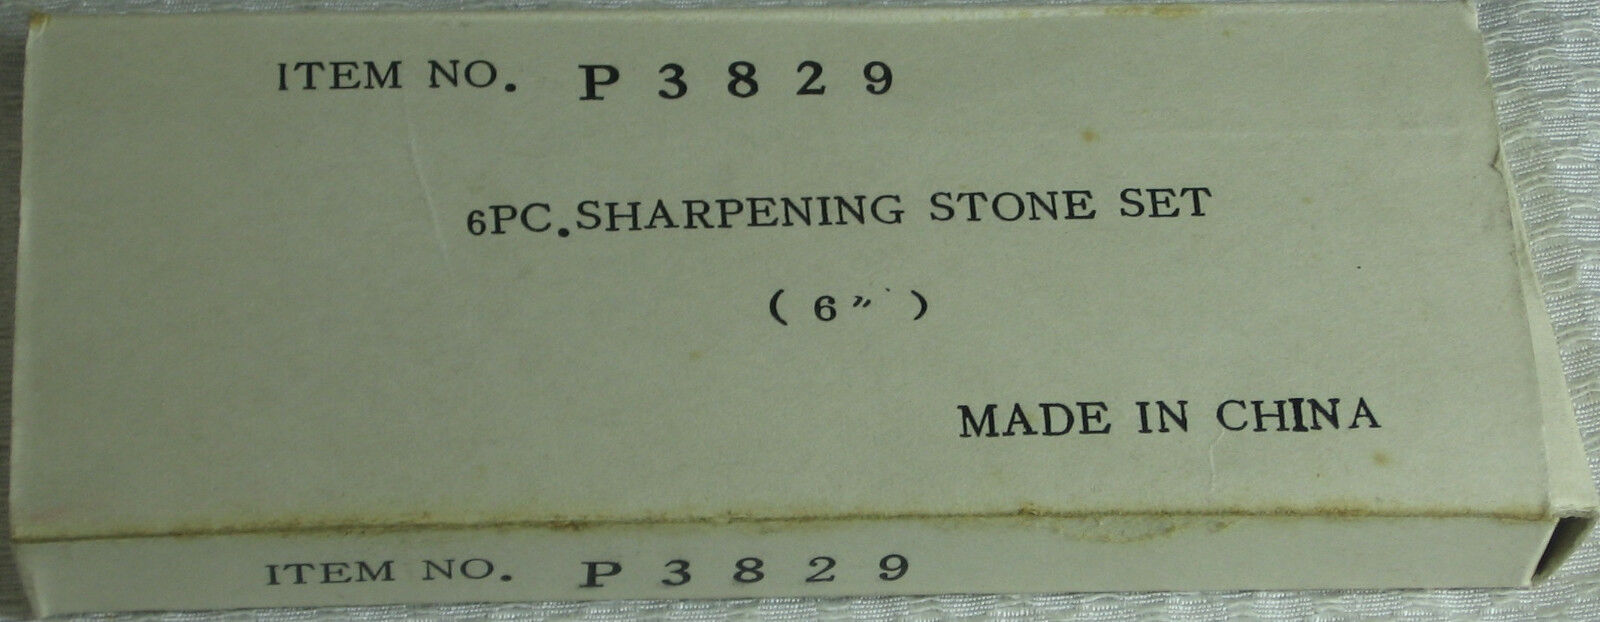 D95 - 6 Piece Sharpening Stone Set - Item # P3829